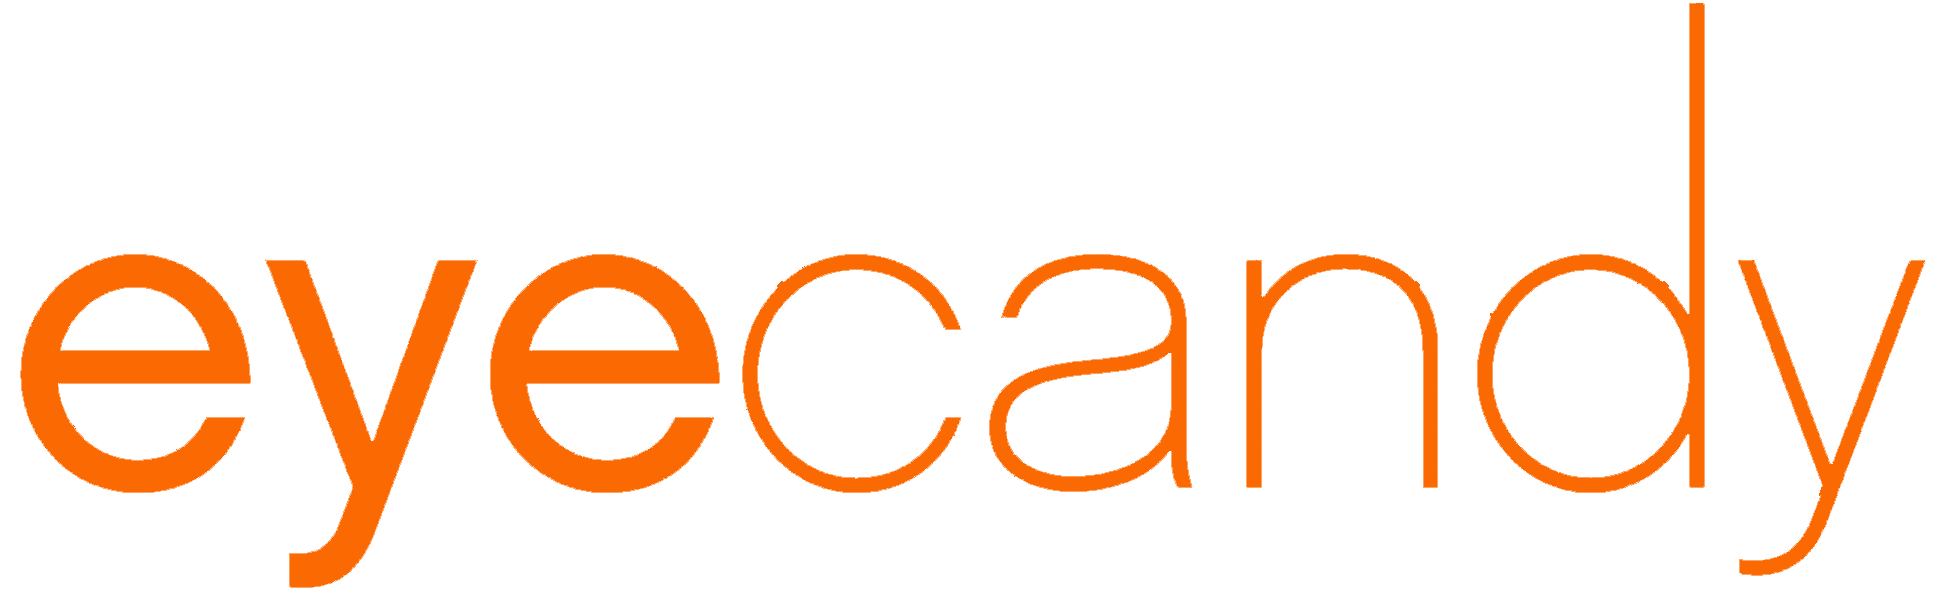 EC logo - orange